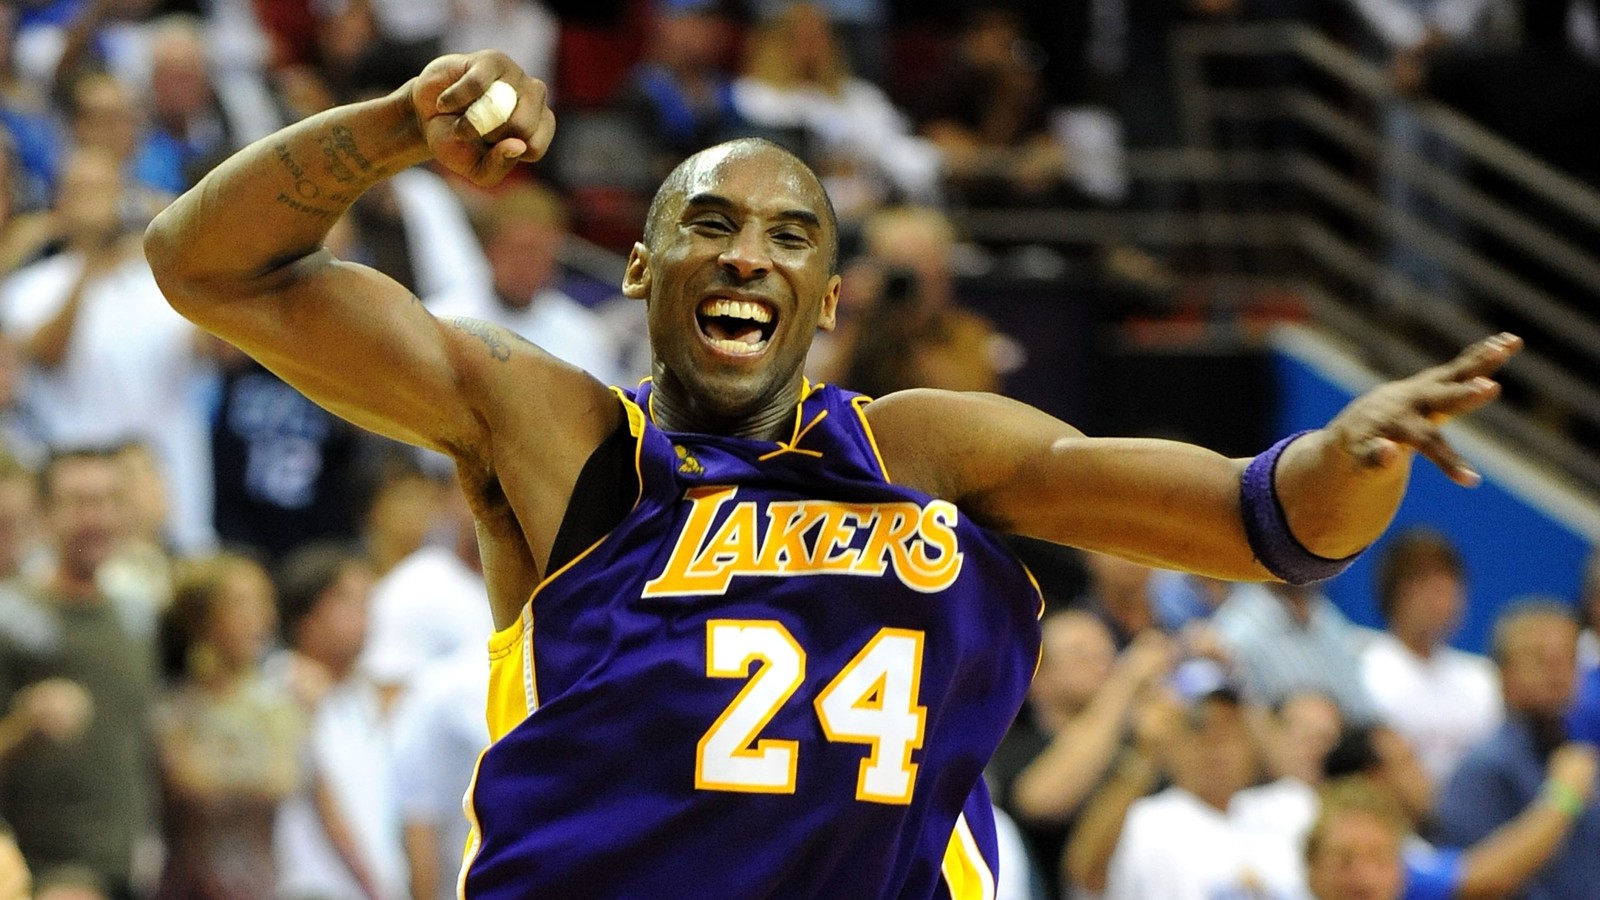 Three Biggest Games One Journalist Saw Kobe Bryant Play